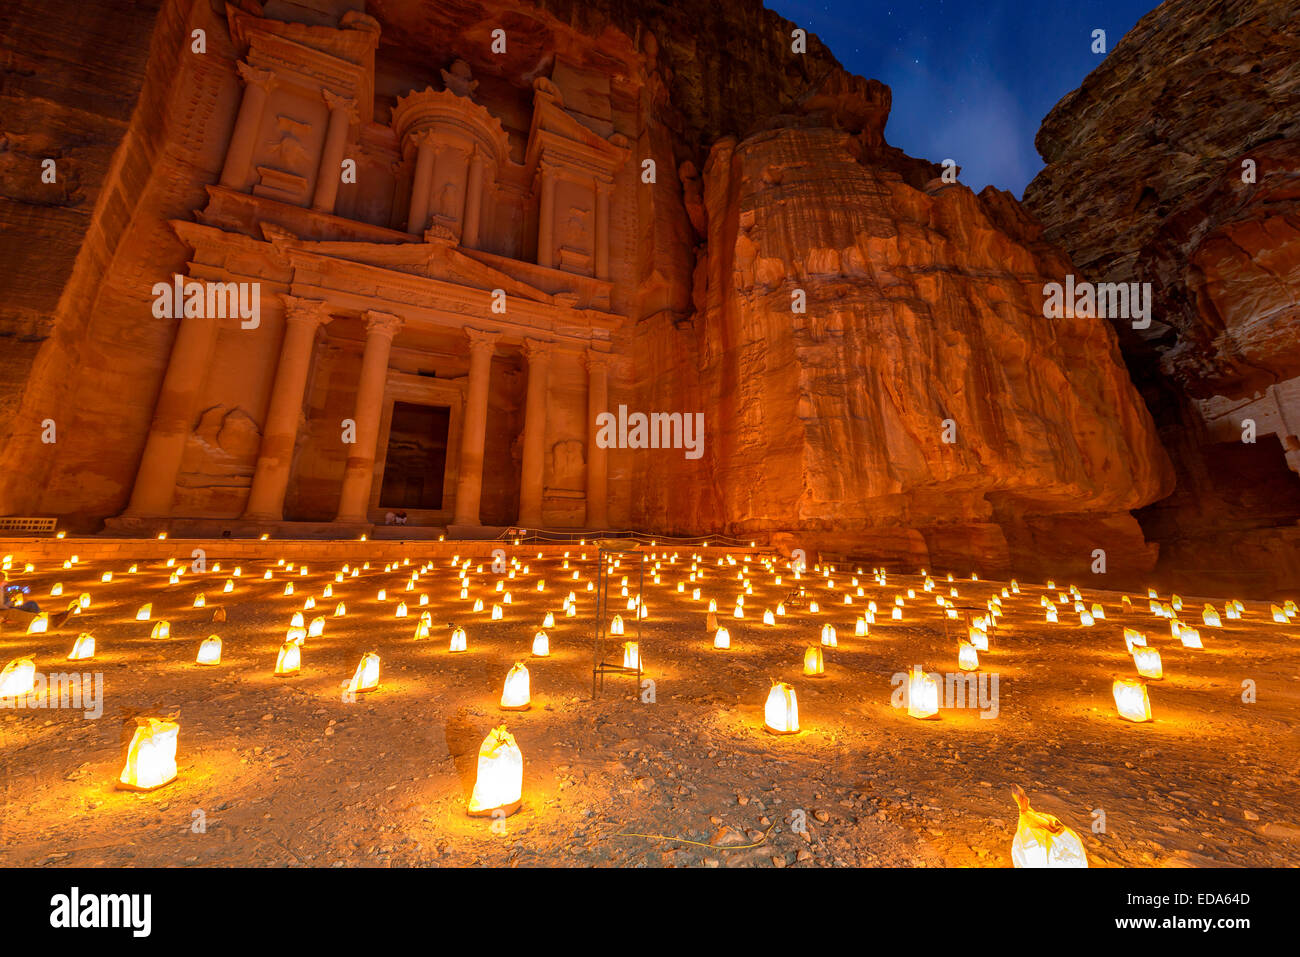 Treasury (Khasneh) in Petra, Jordan at night. Petra by Night in the light of 1,800 candles. Stock Photo